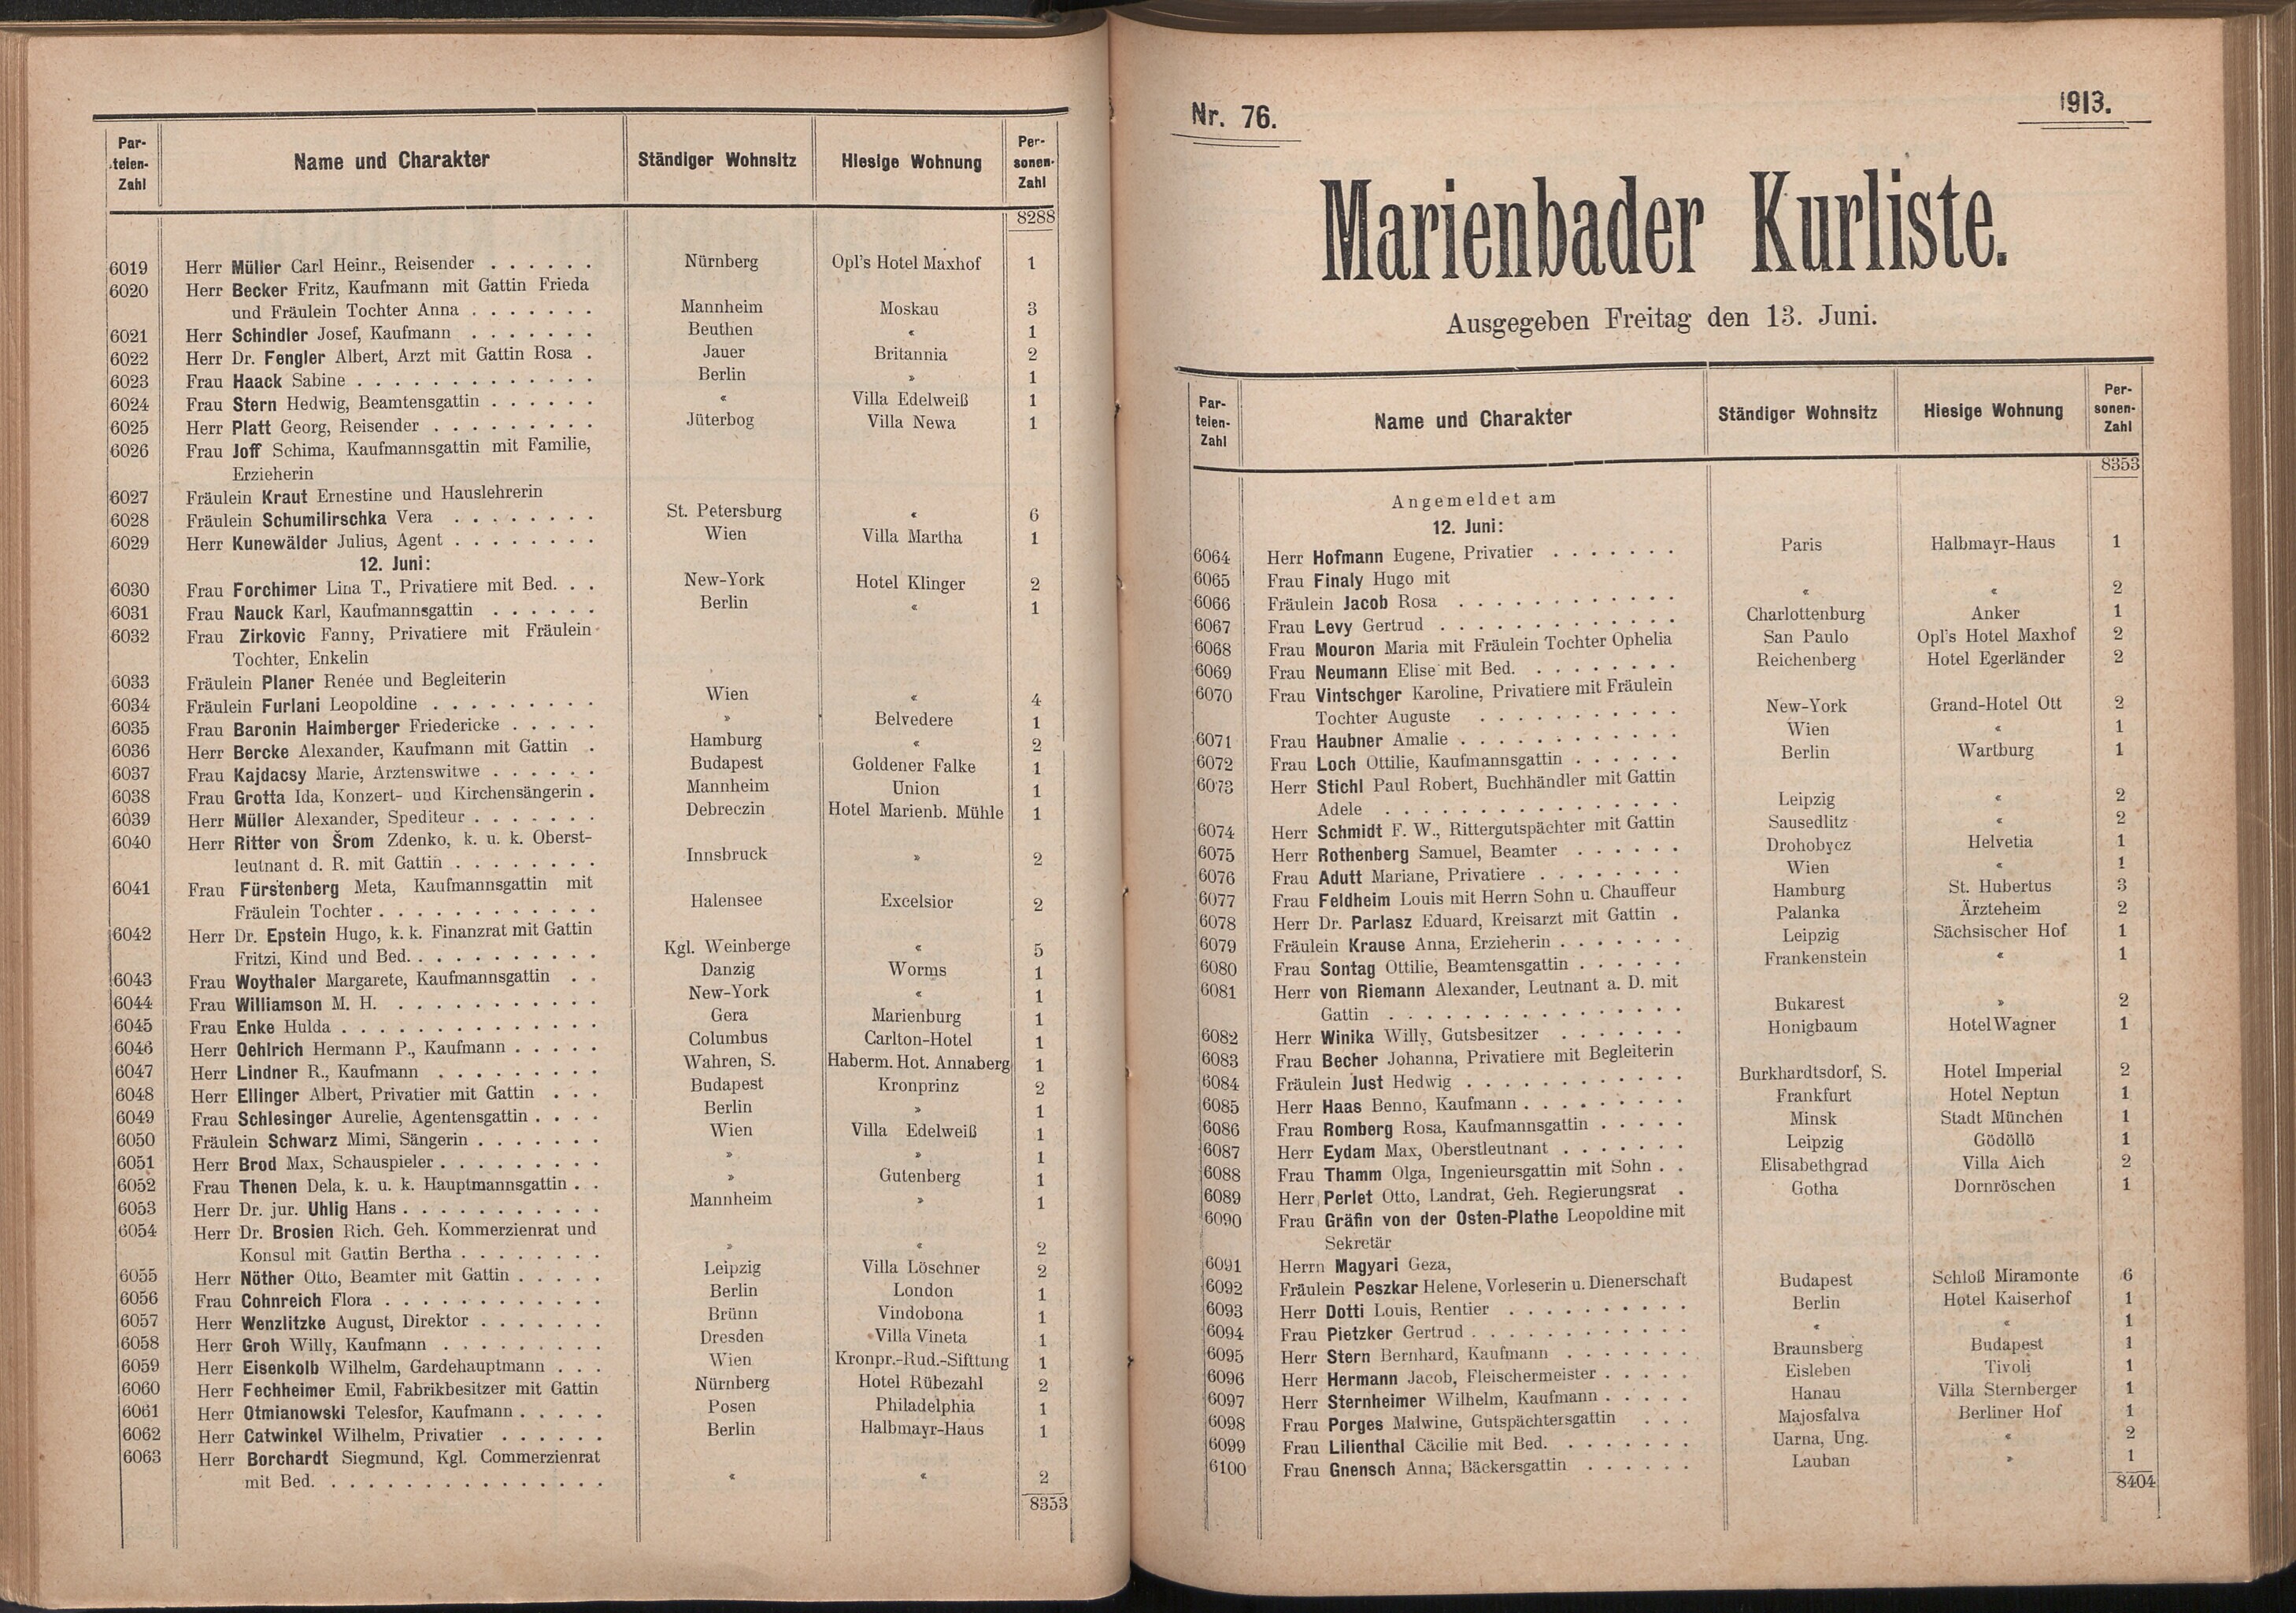 93. soap-ch_knihovna_marienbader-kurliste-1913_0930